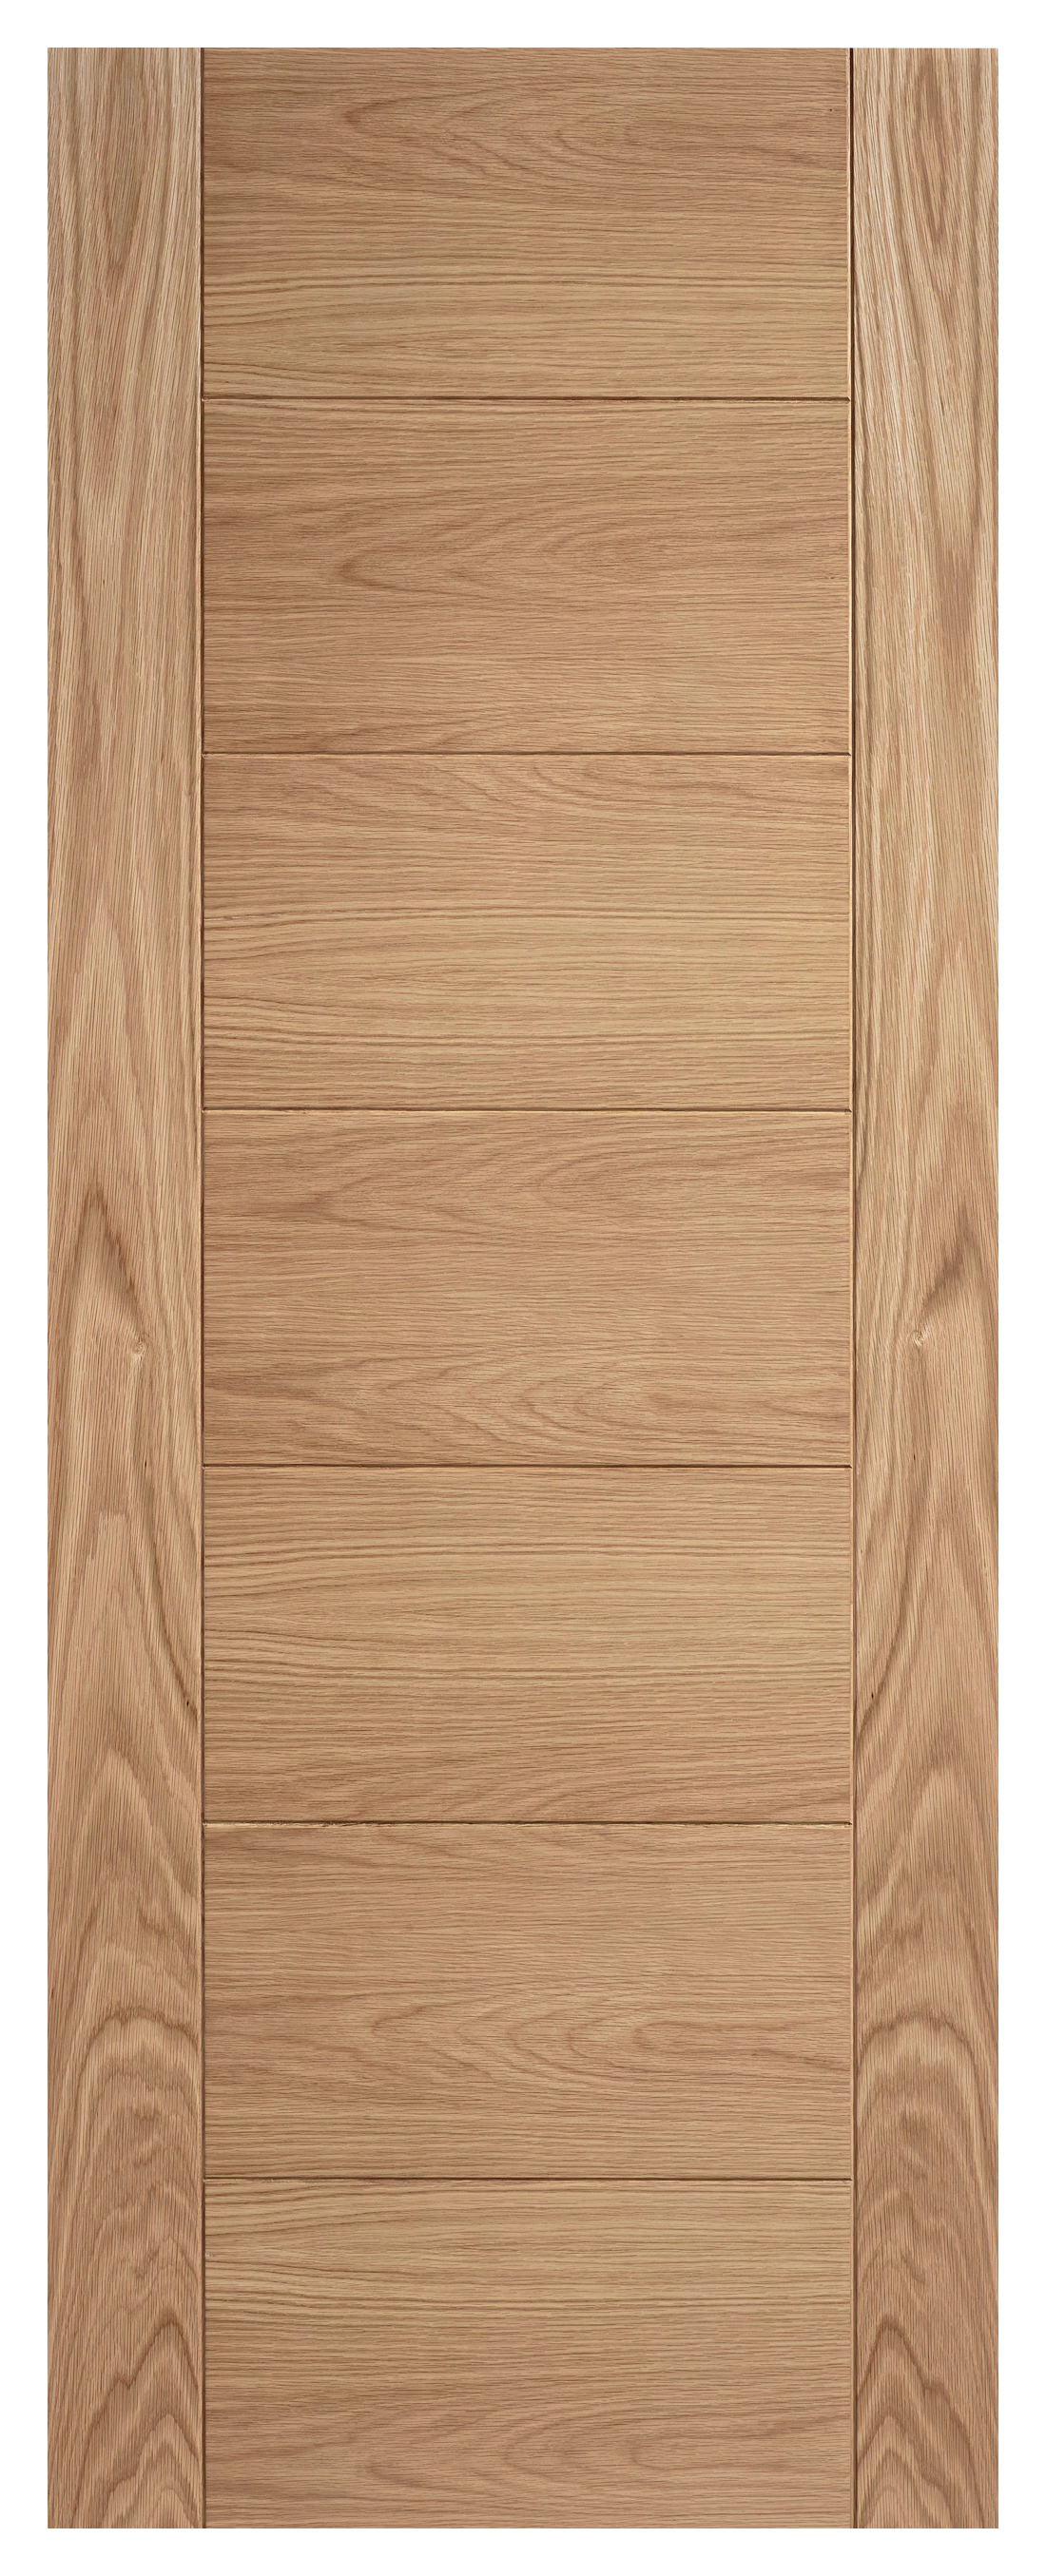 Image of LPD Internal Carini 7 Panel Pre-Finished Oak FD30 Fire Door - 826 x 2040mm